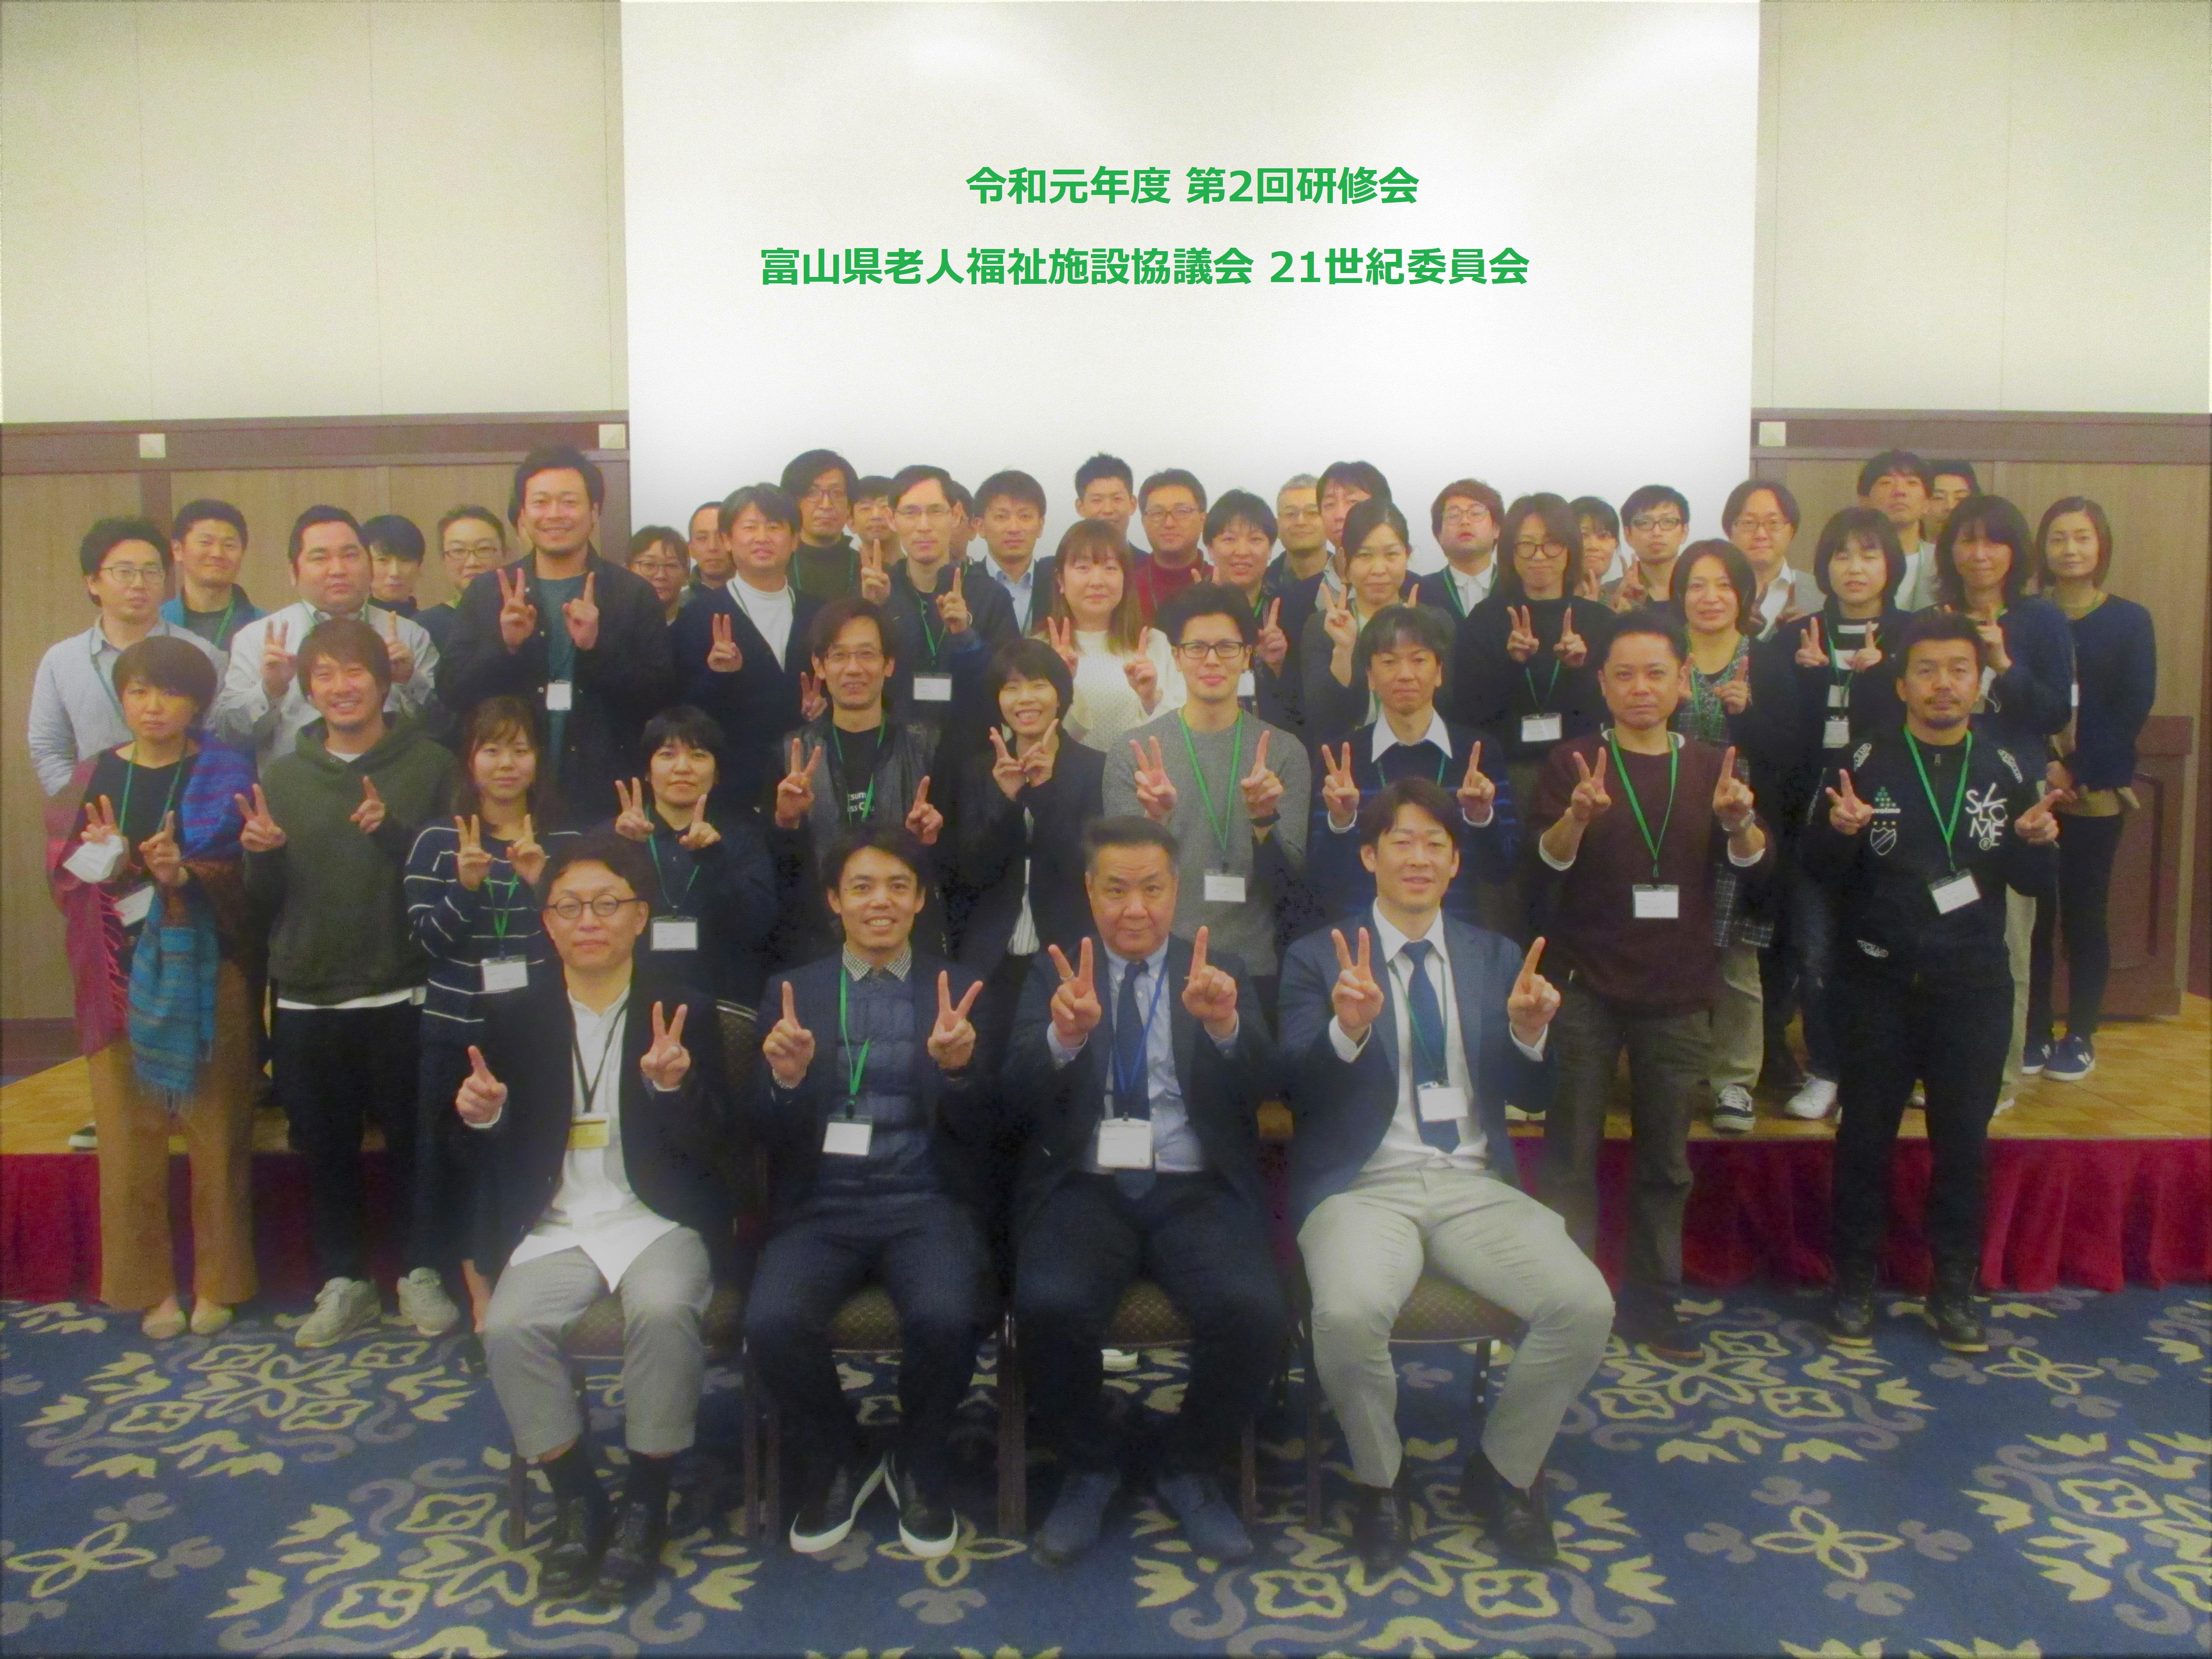 21世紀委員会研修会の開催について 令和元年度第2回 2 21 富山県老人福祉施設協議会